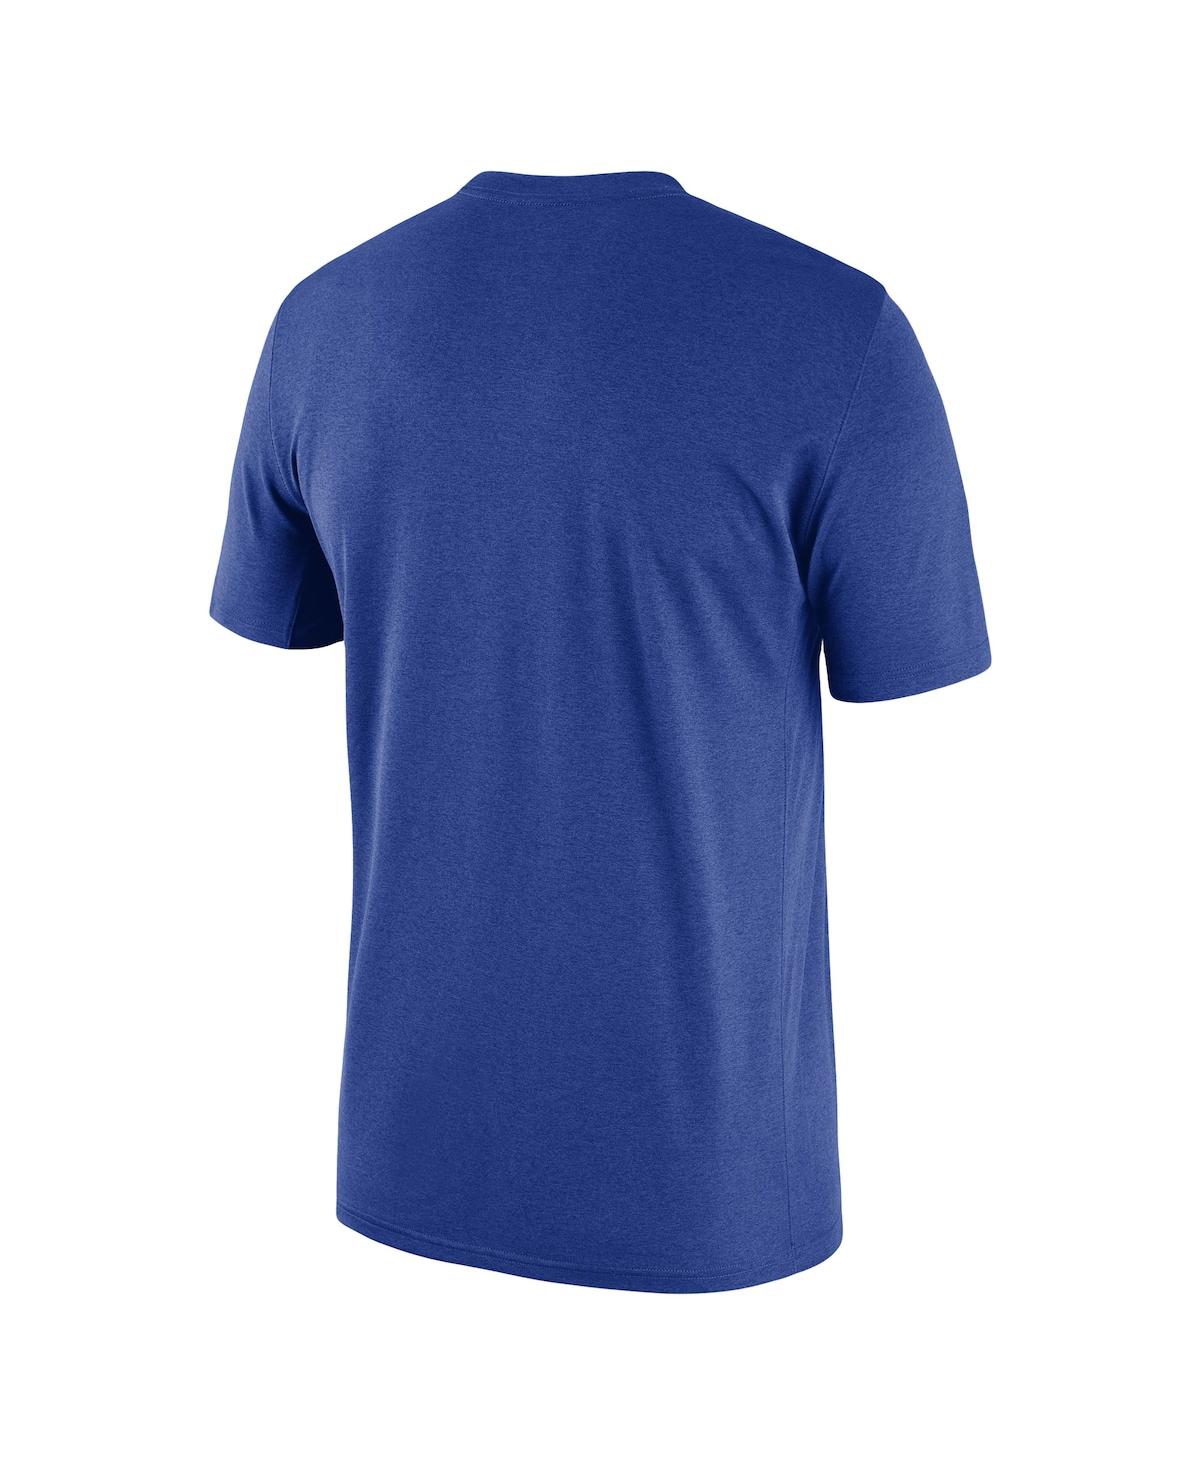 Men's Golden State Warriors Nike Royal Practice Legend Performance T-Shirt